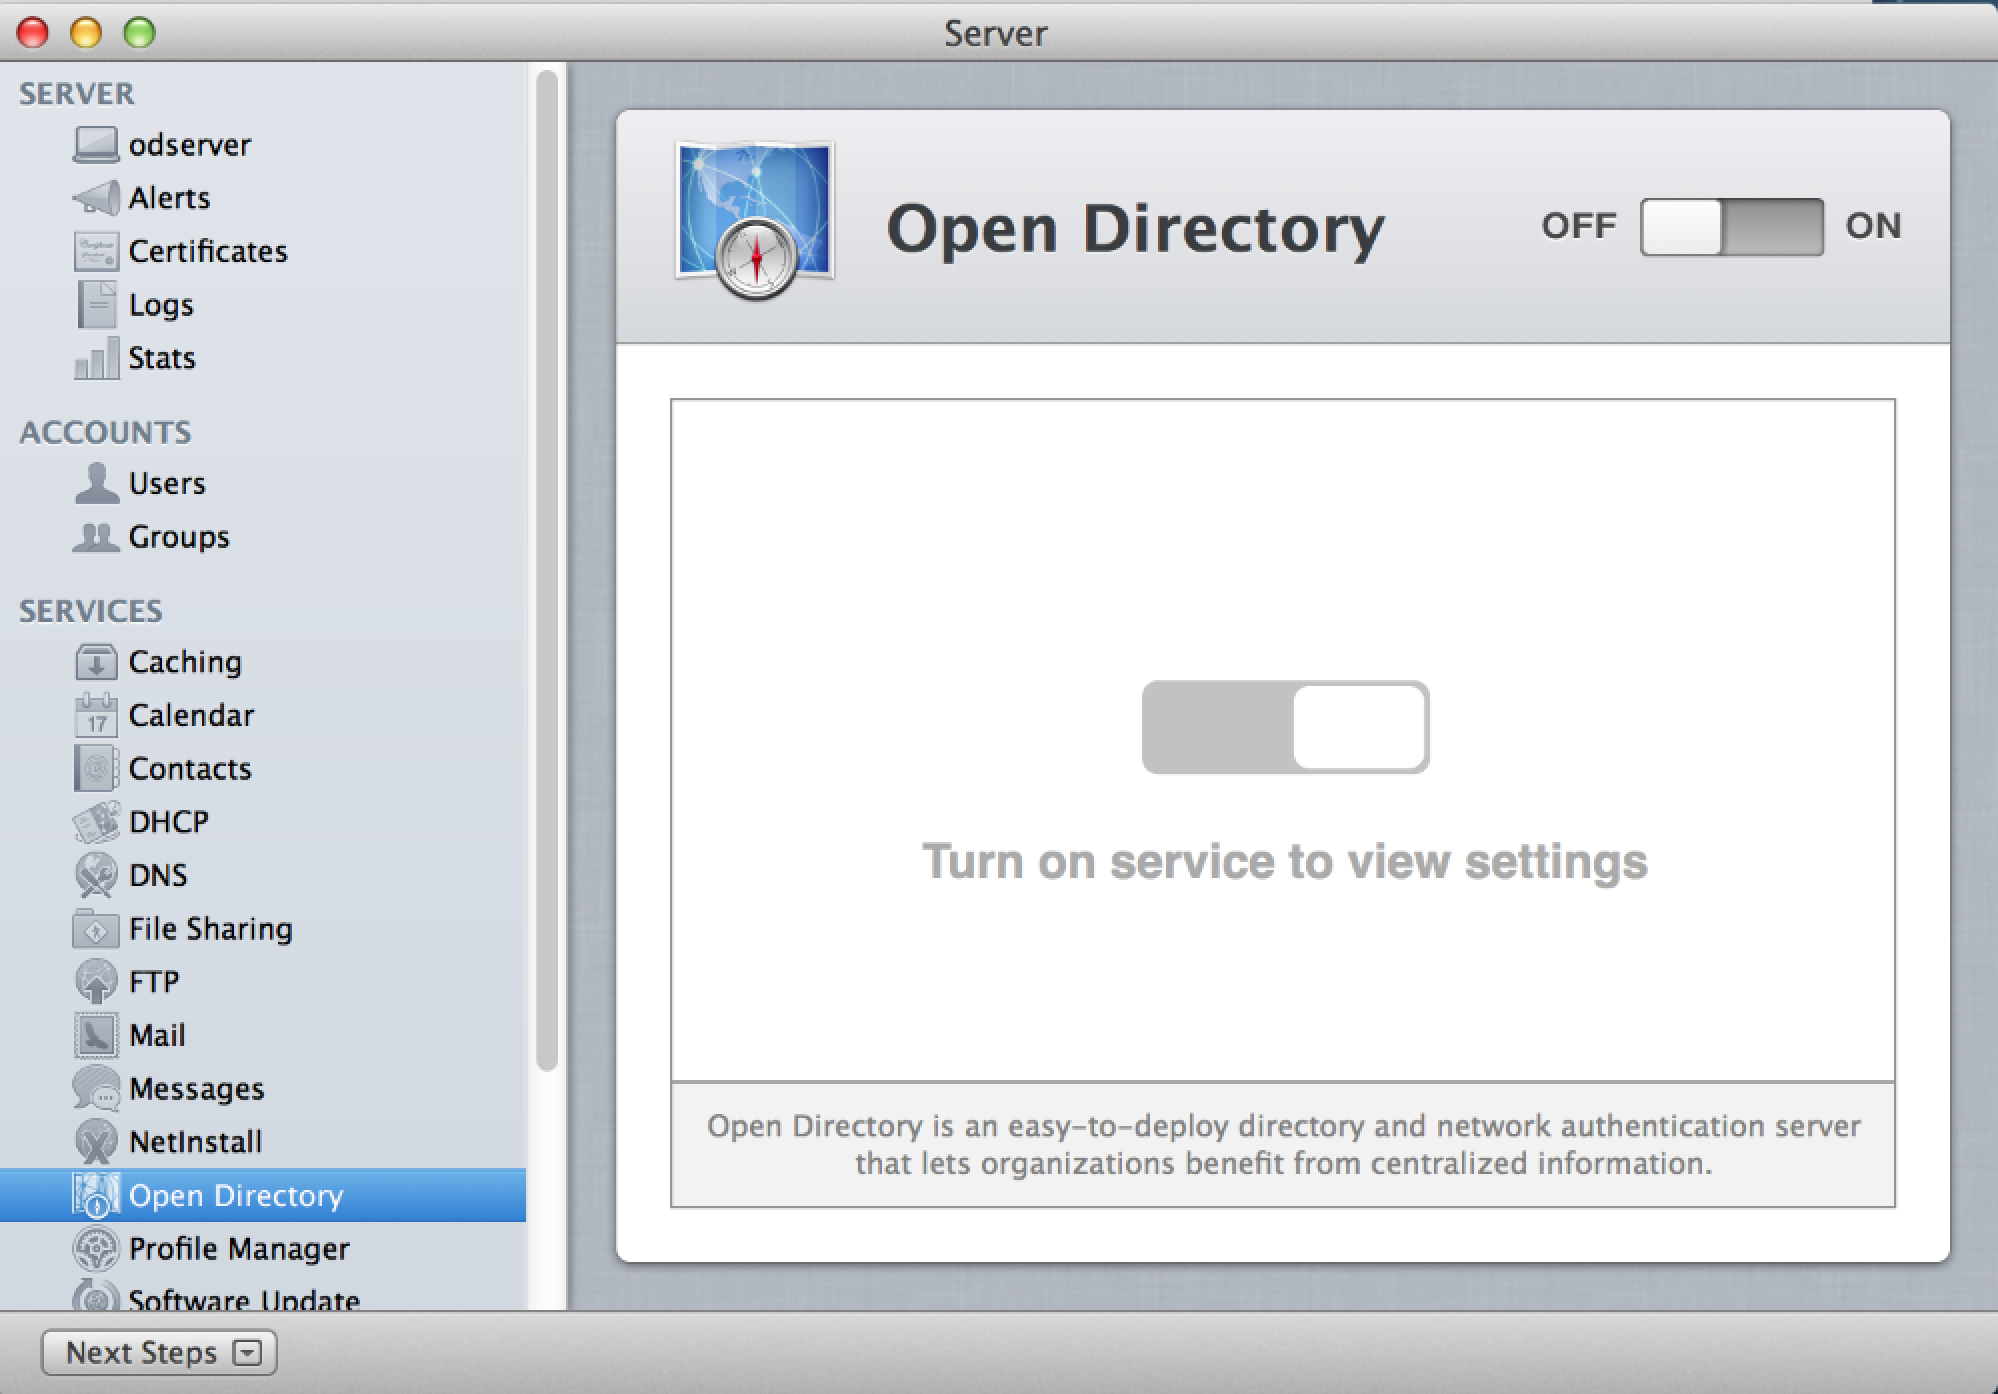 Screenshot 2.1 - Open Directory Setup - Select Open Directory